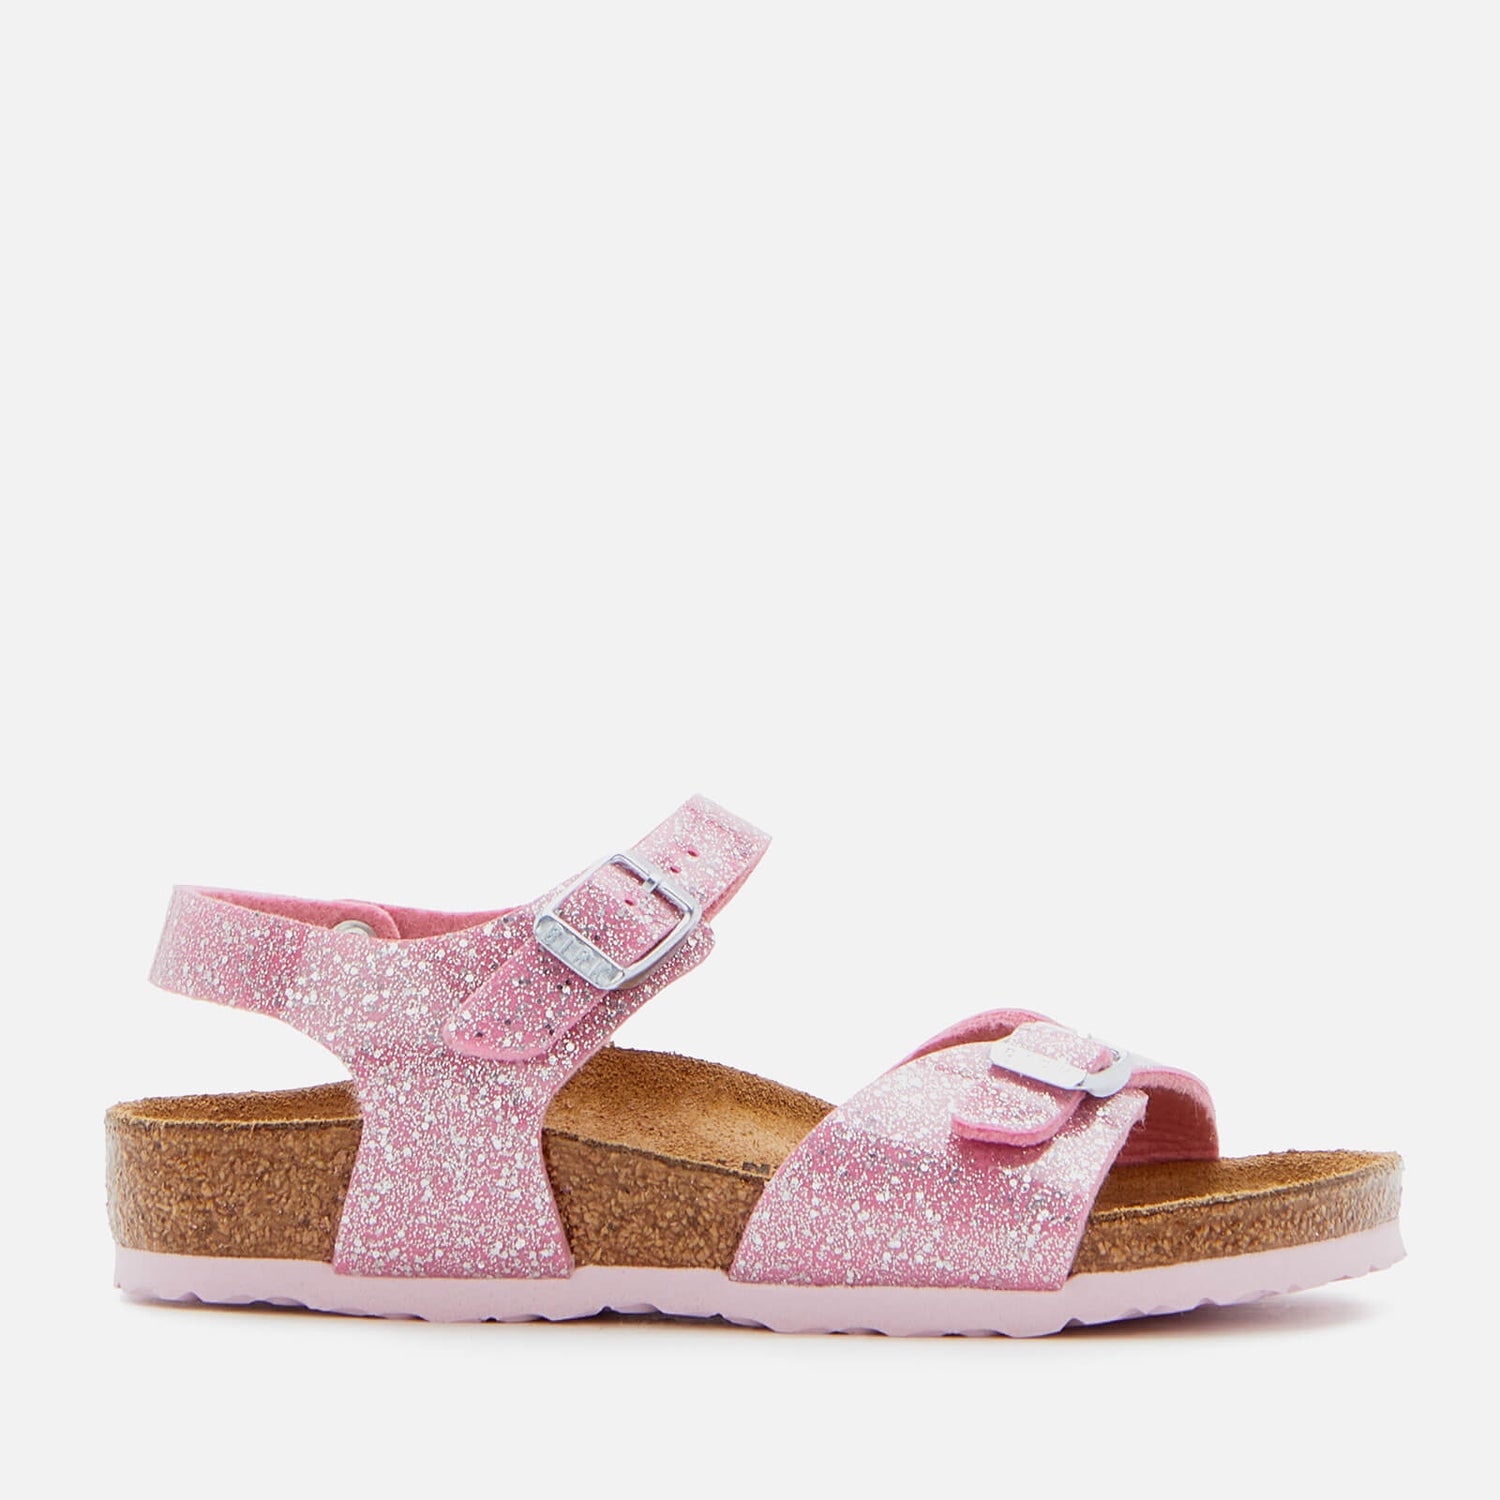 Birkenstock Rio Plain Sandals - Cosmic Sparkle Candy Pink